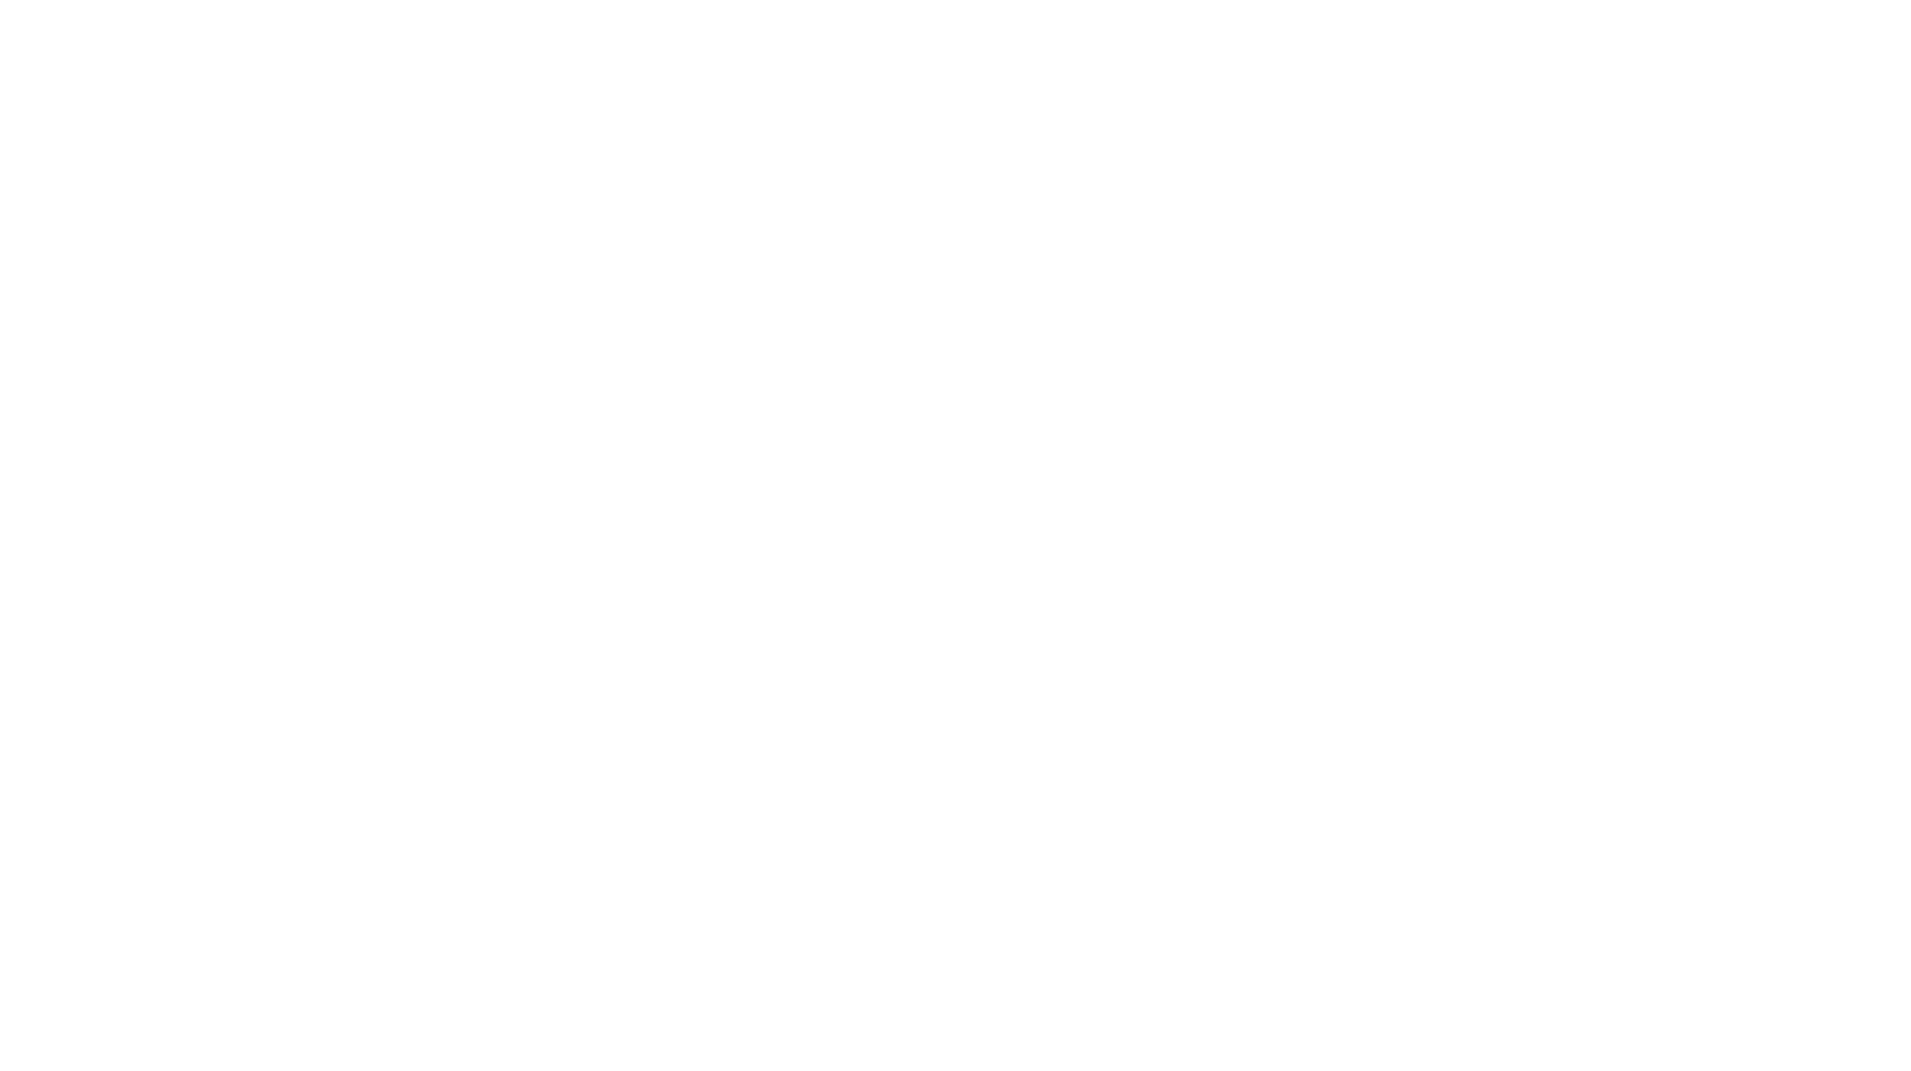 Nina Hambleton